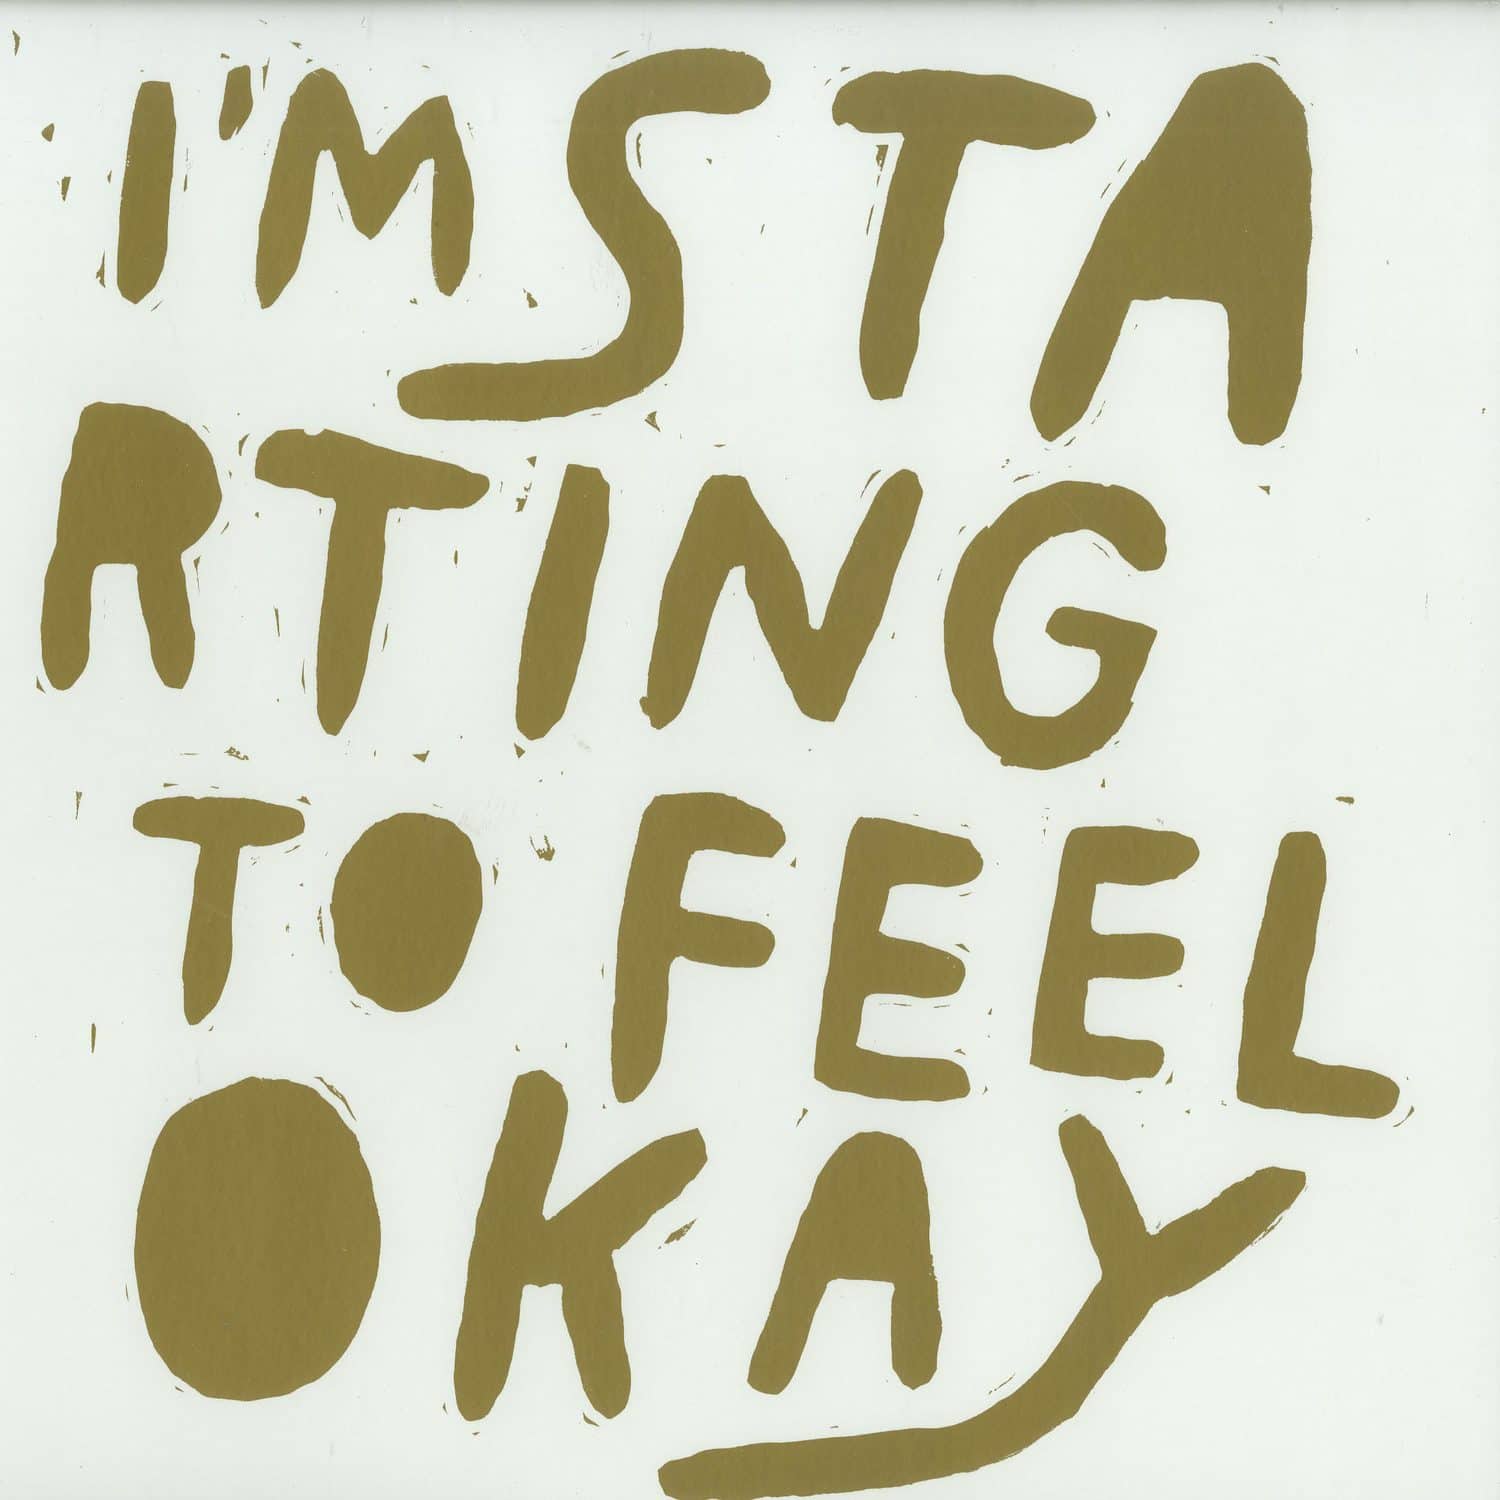 I'M starting to feel okay - Vol. 4.